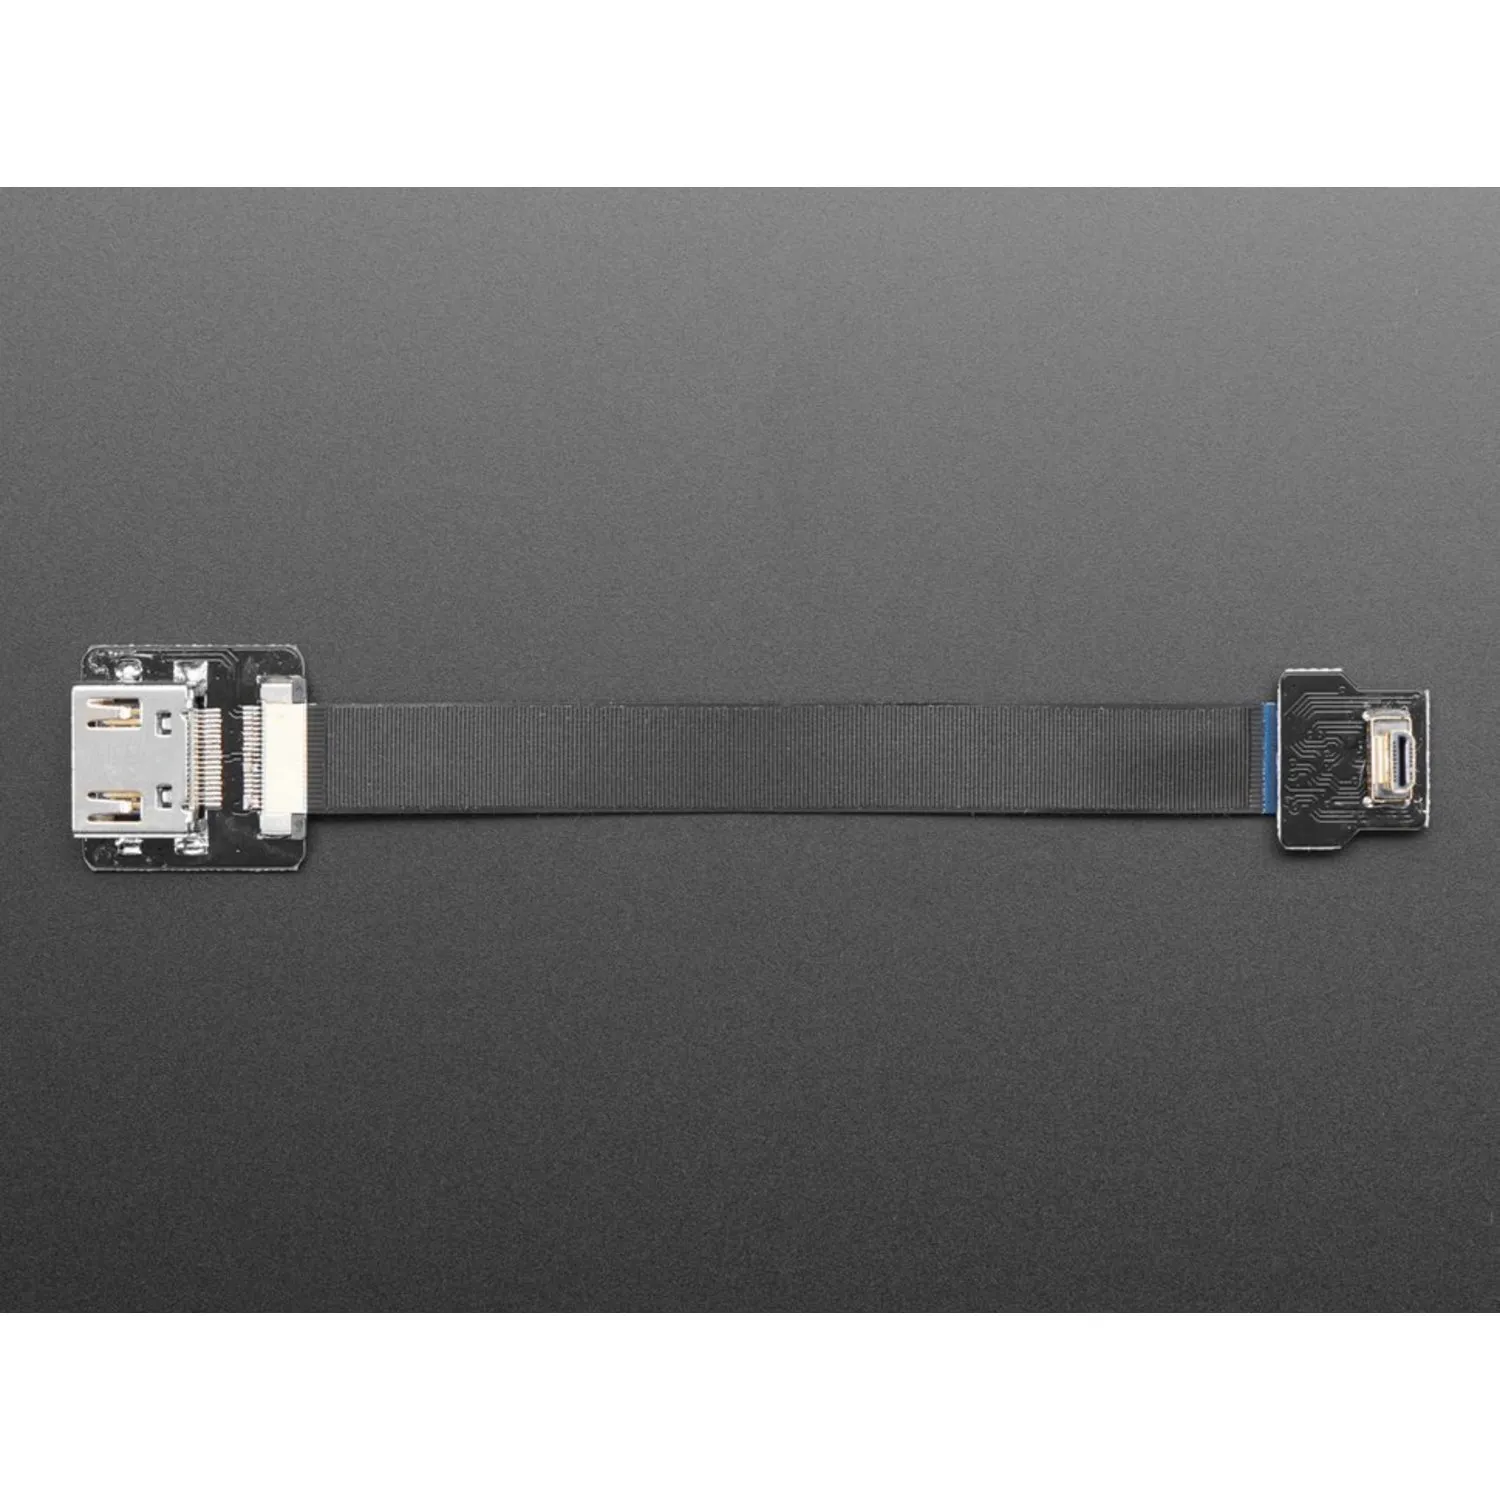 Photo of DIY HDMI Cable Parts - 10 cm HDMI Ribbon Cable